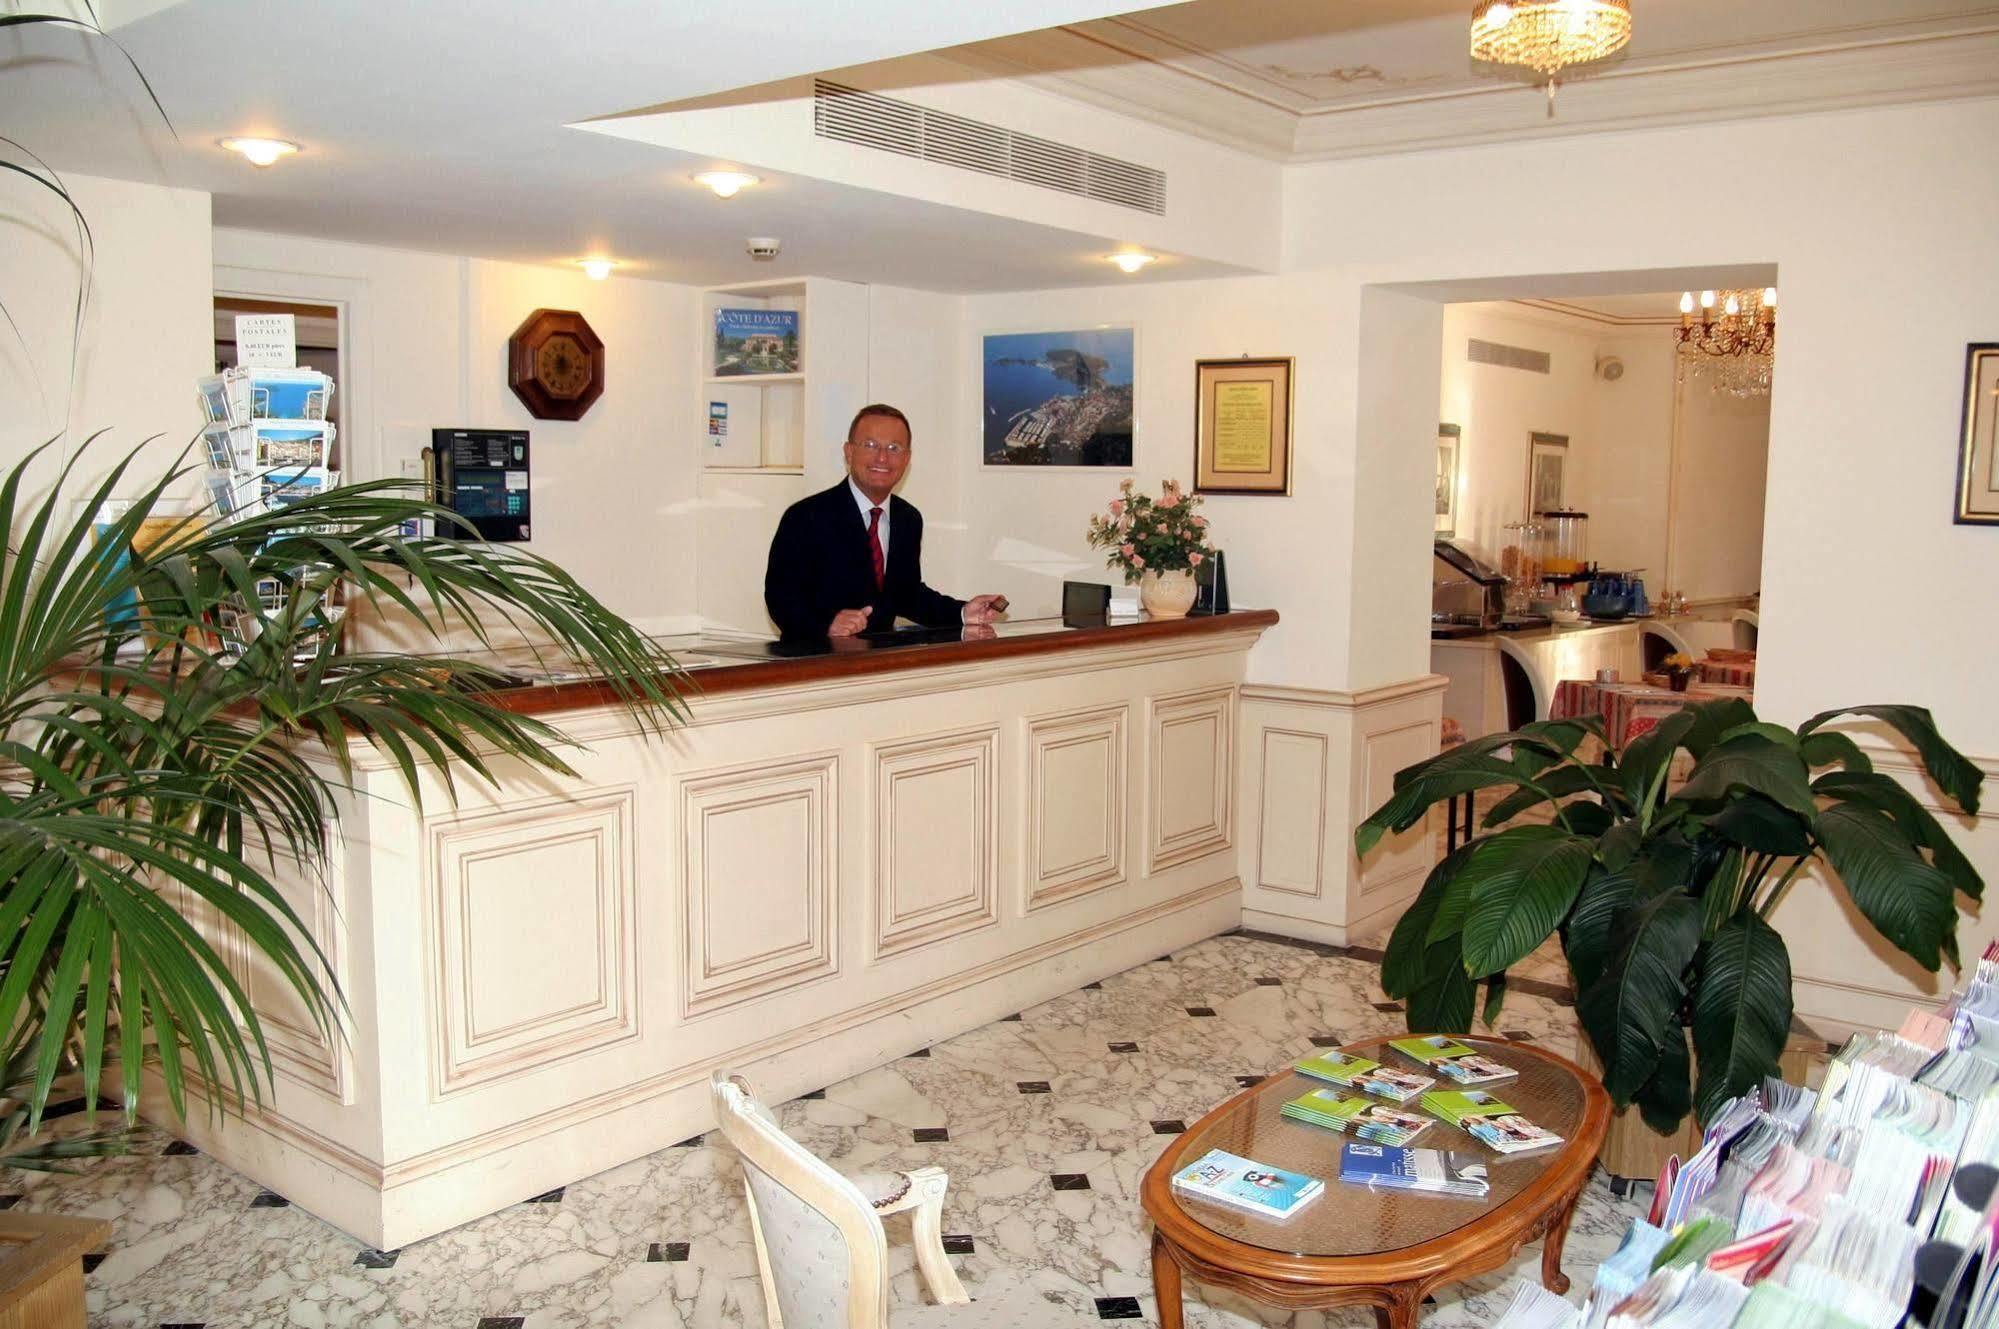 Hotel Carlton Beaulieu-sur-Mer Eksteriør billede